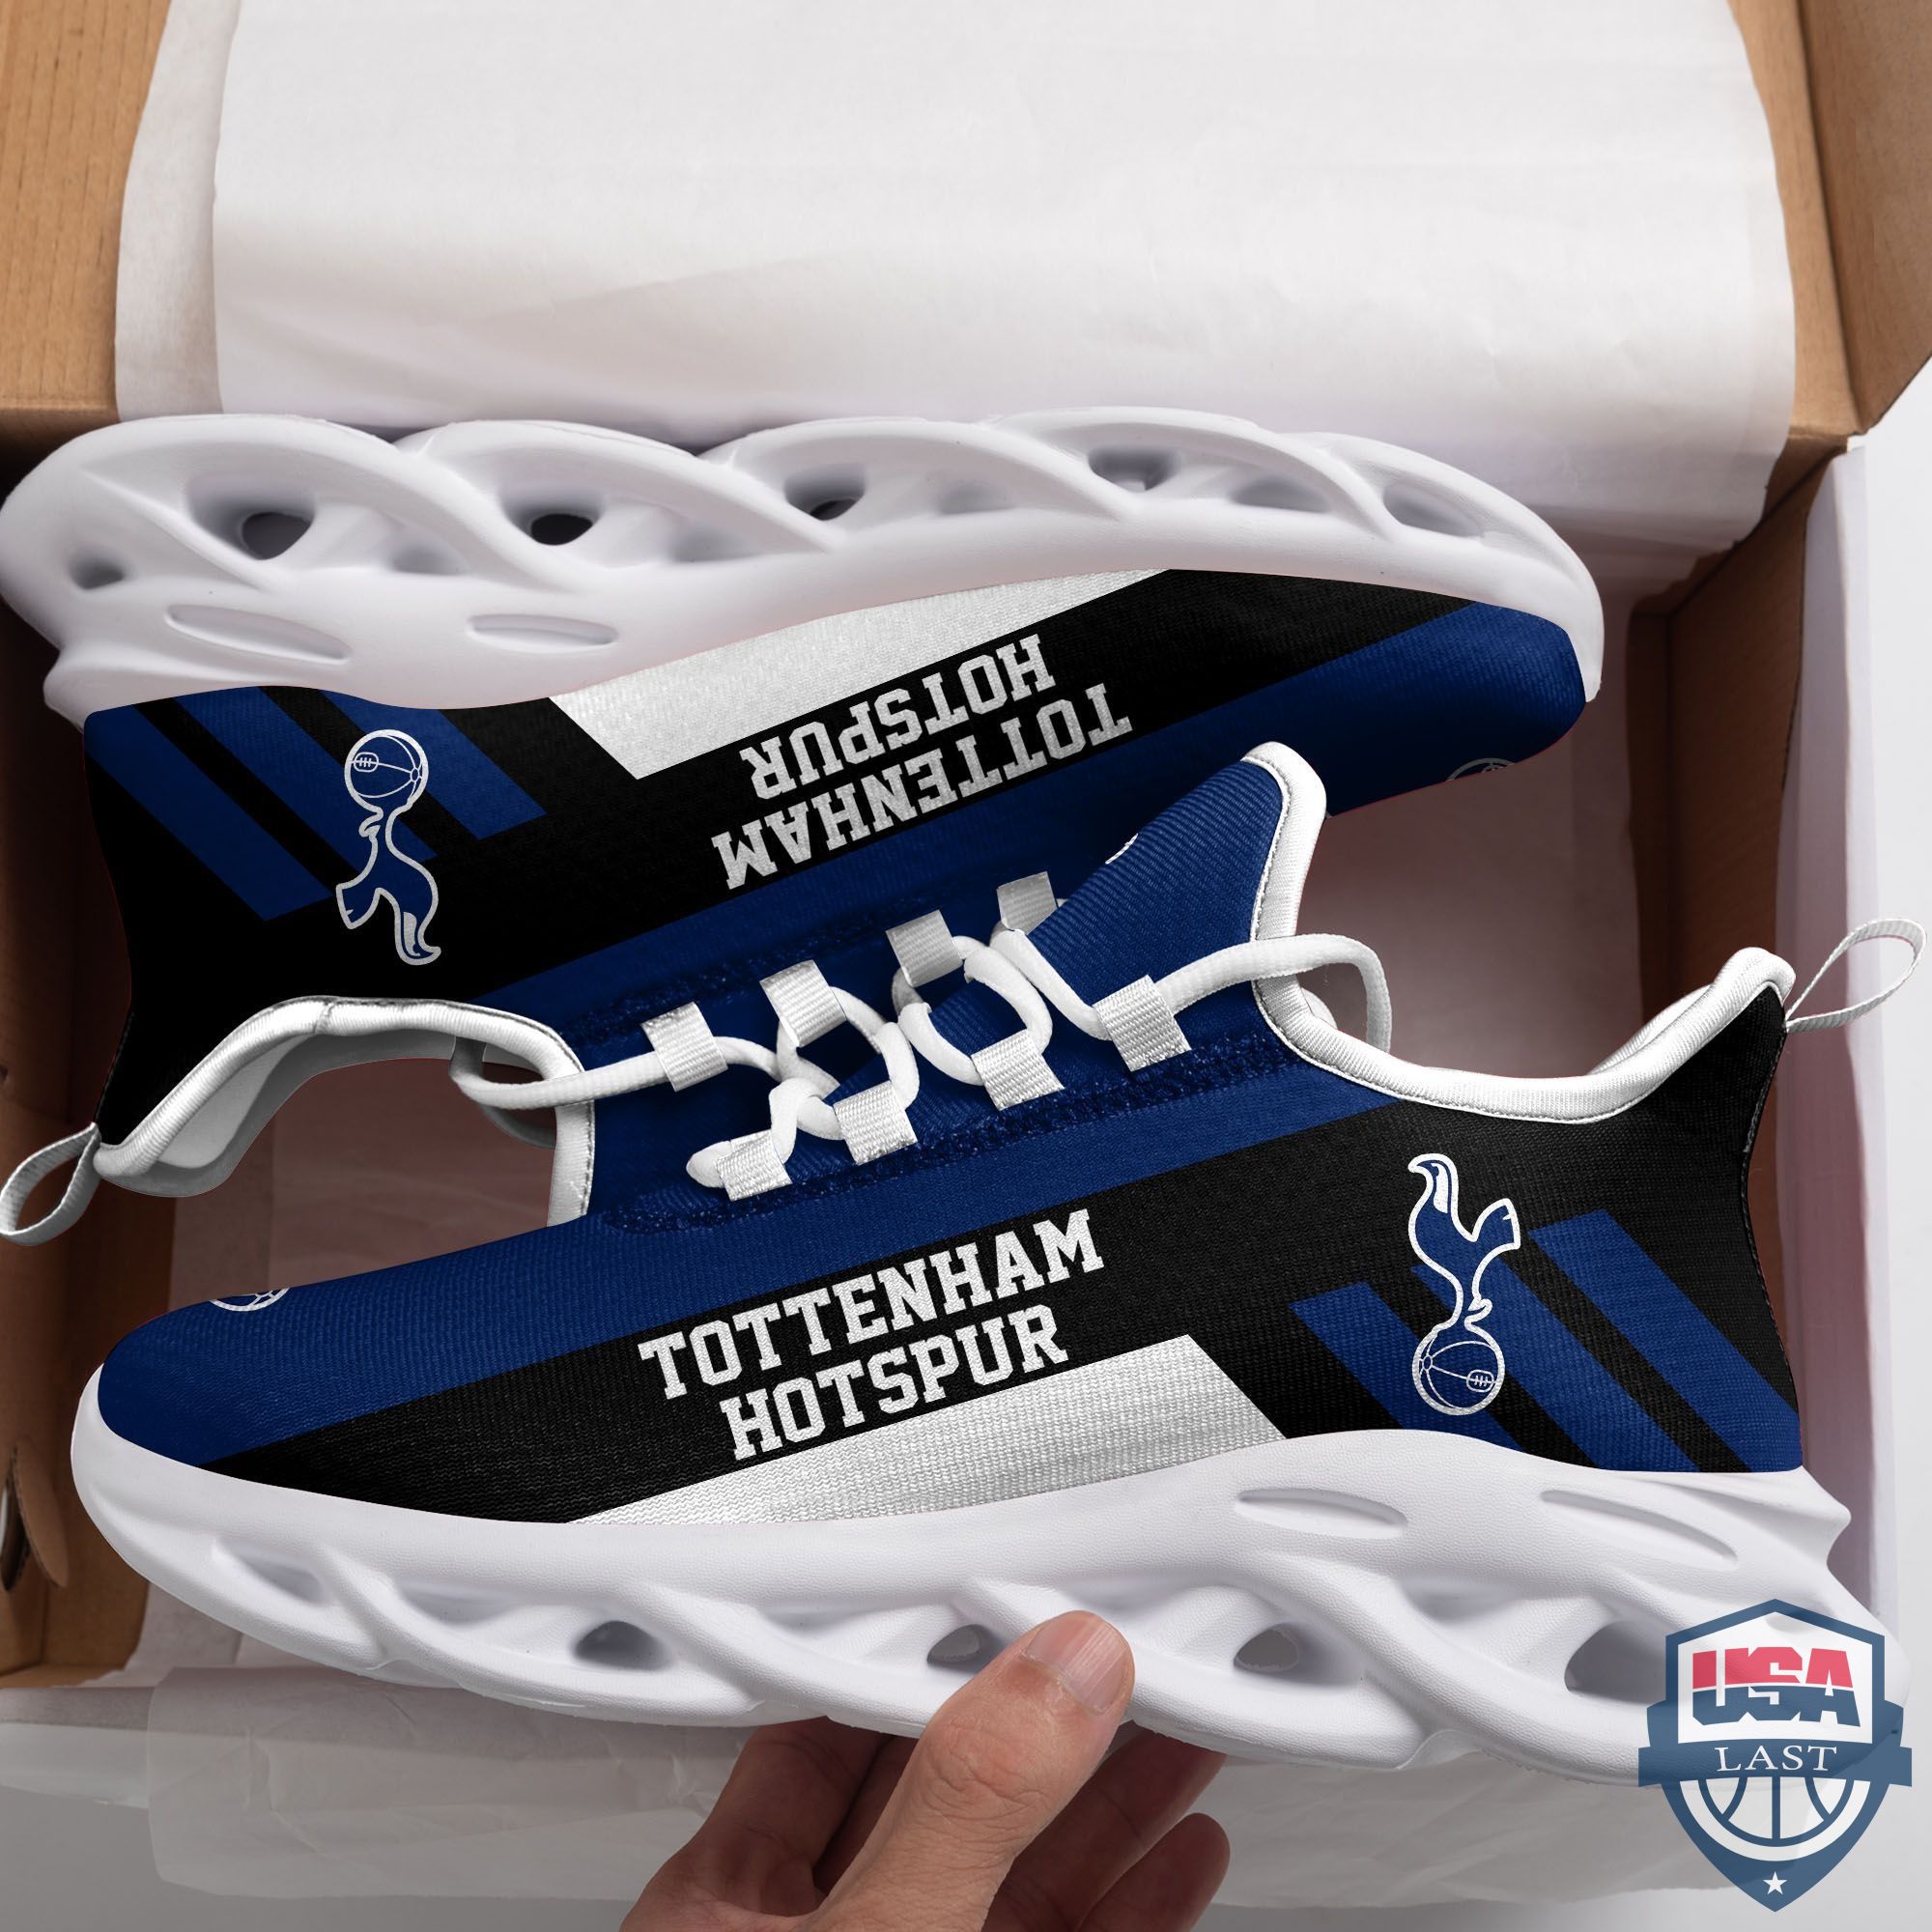 Tottenham Hotspur Max Soul Sneakers Running Sports Shoes